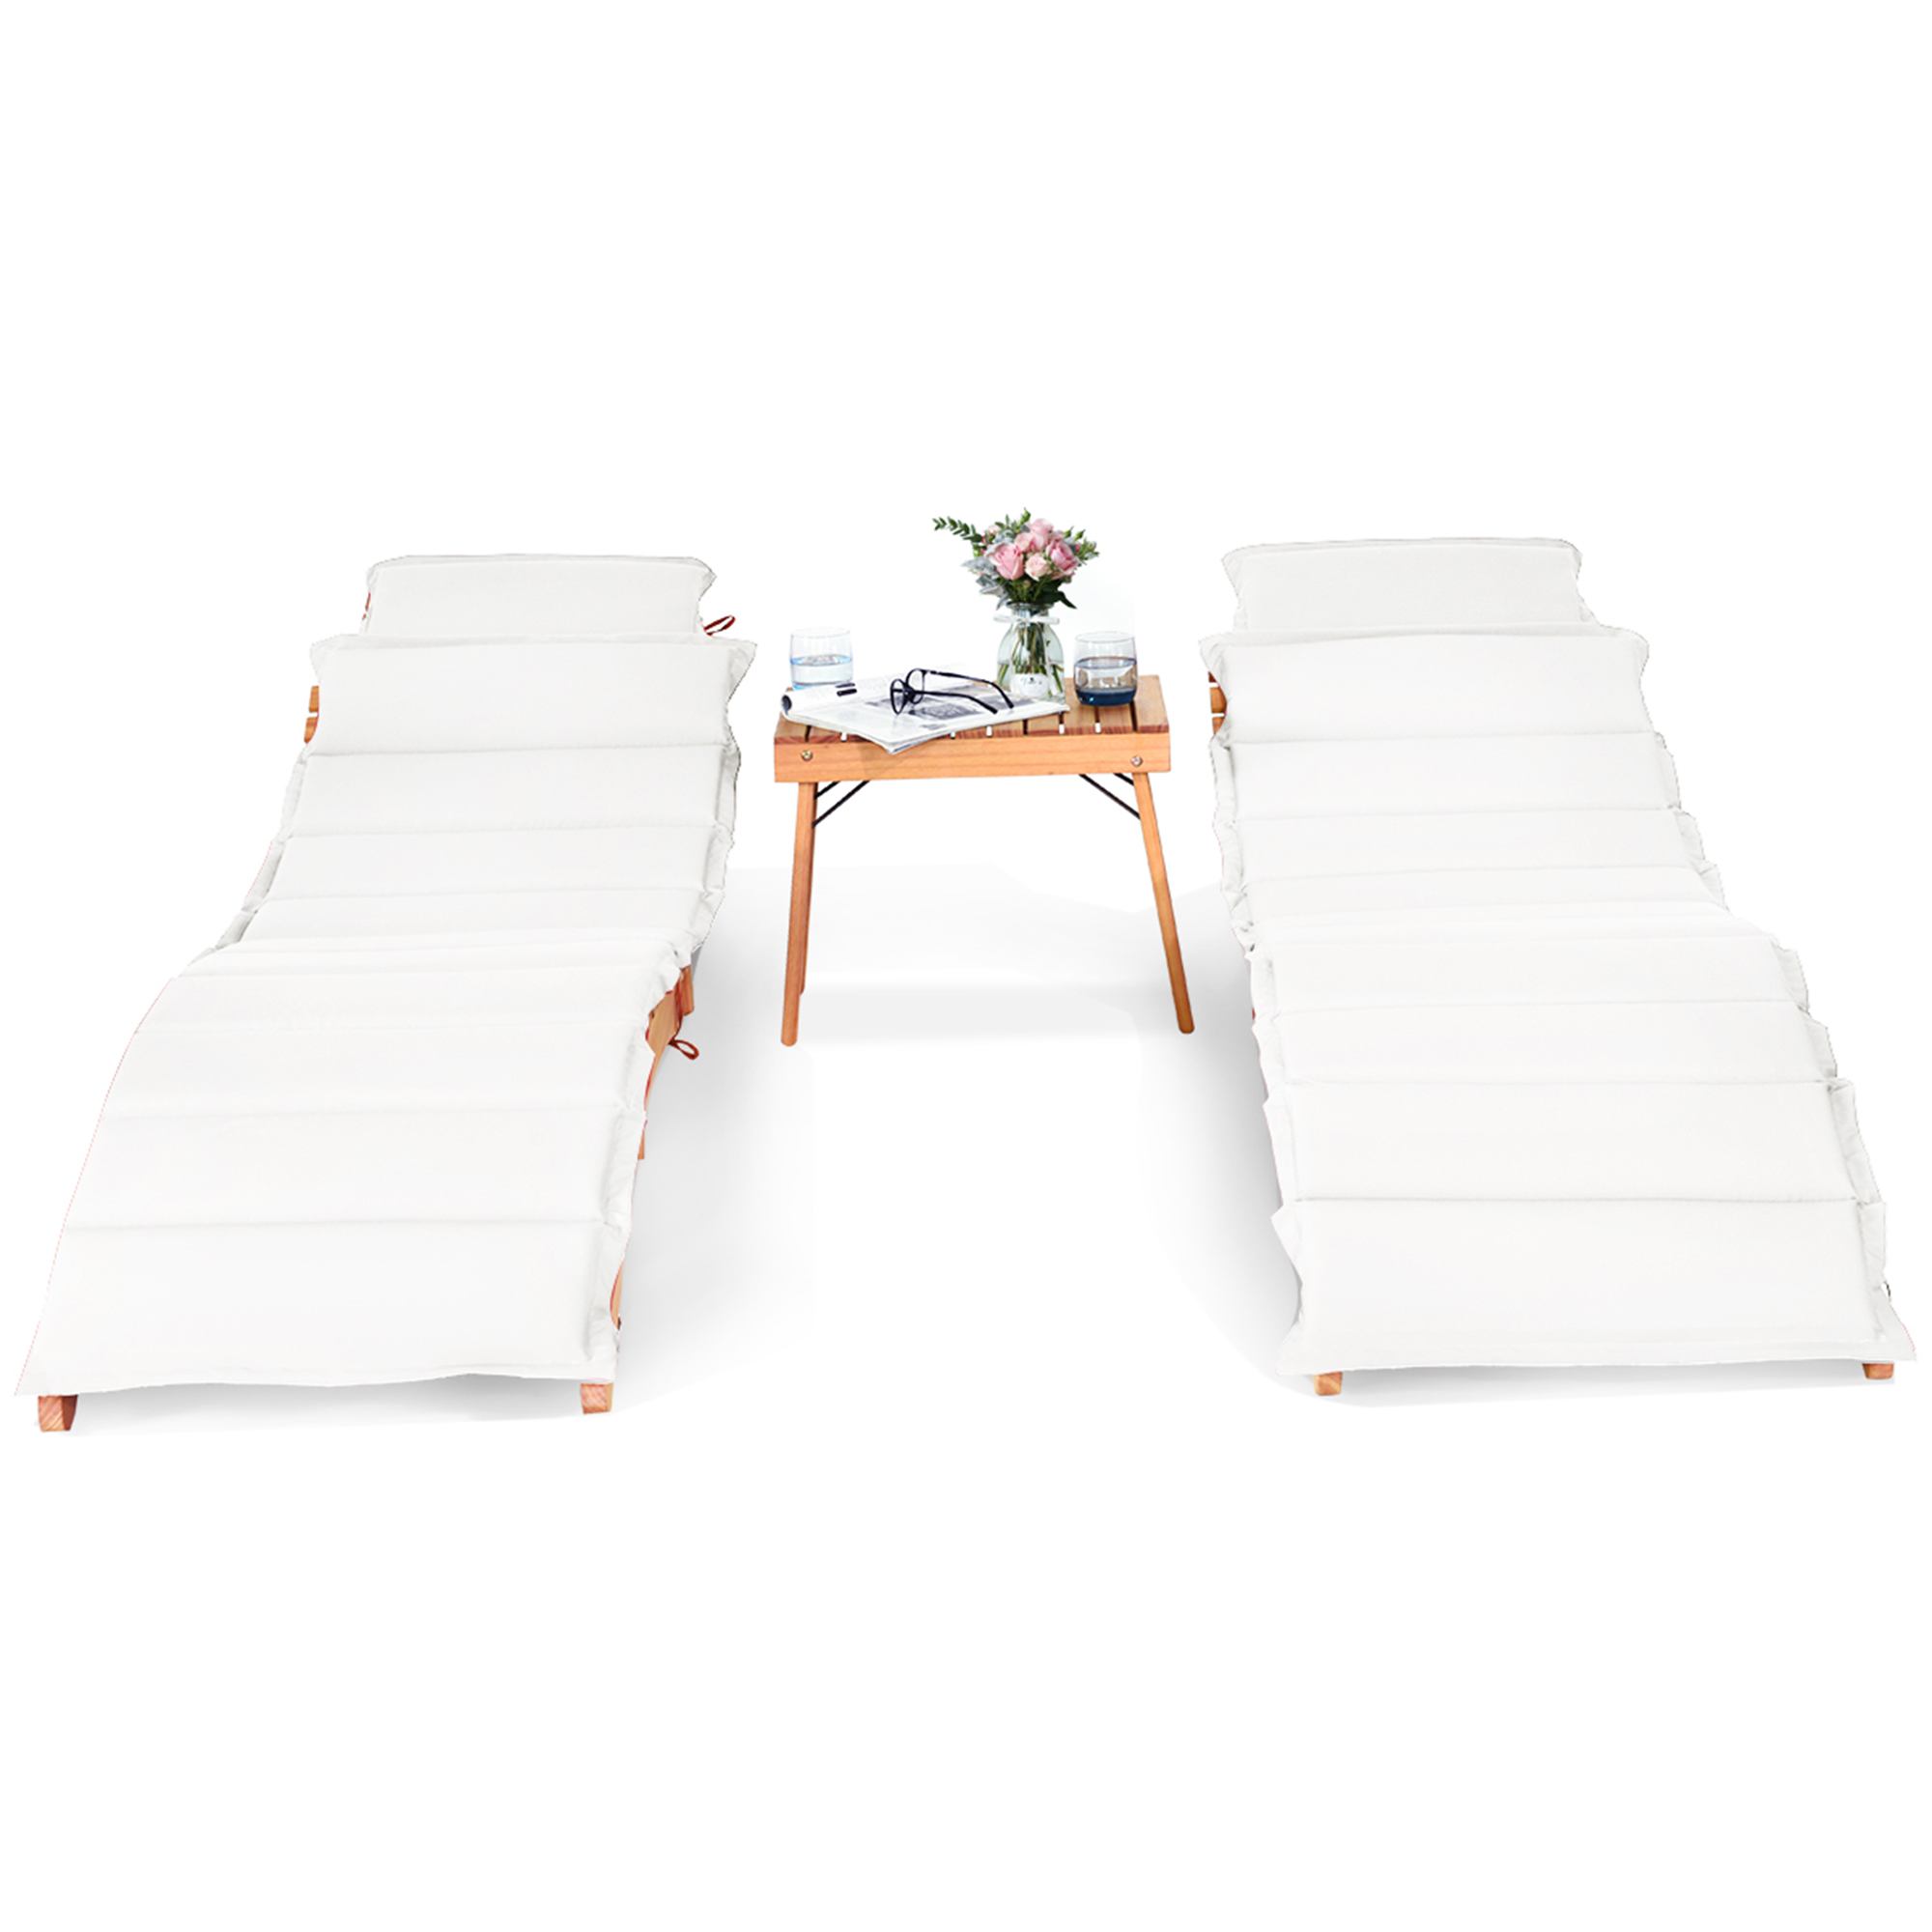 Costway 3PCS Wooden Folding Lounge Chair Set Cushion Pad Pool Deck - image 6 of 10